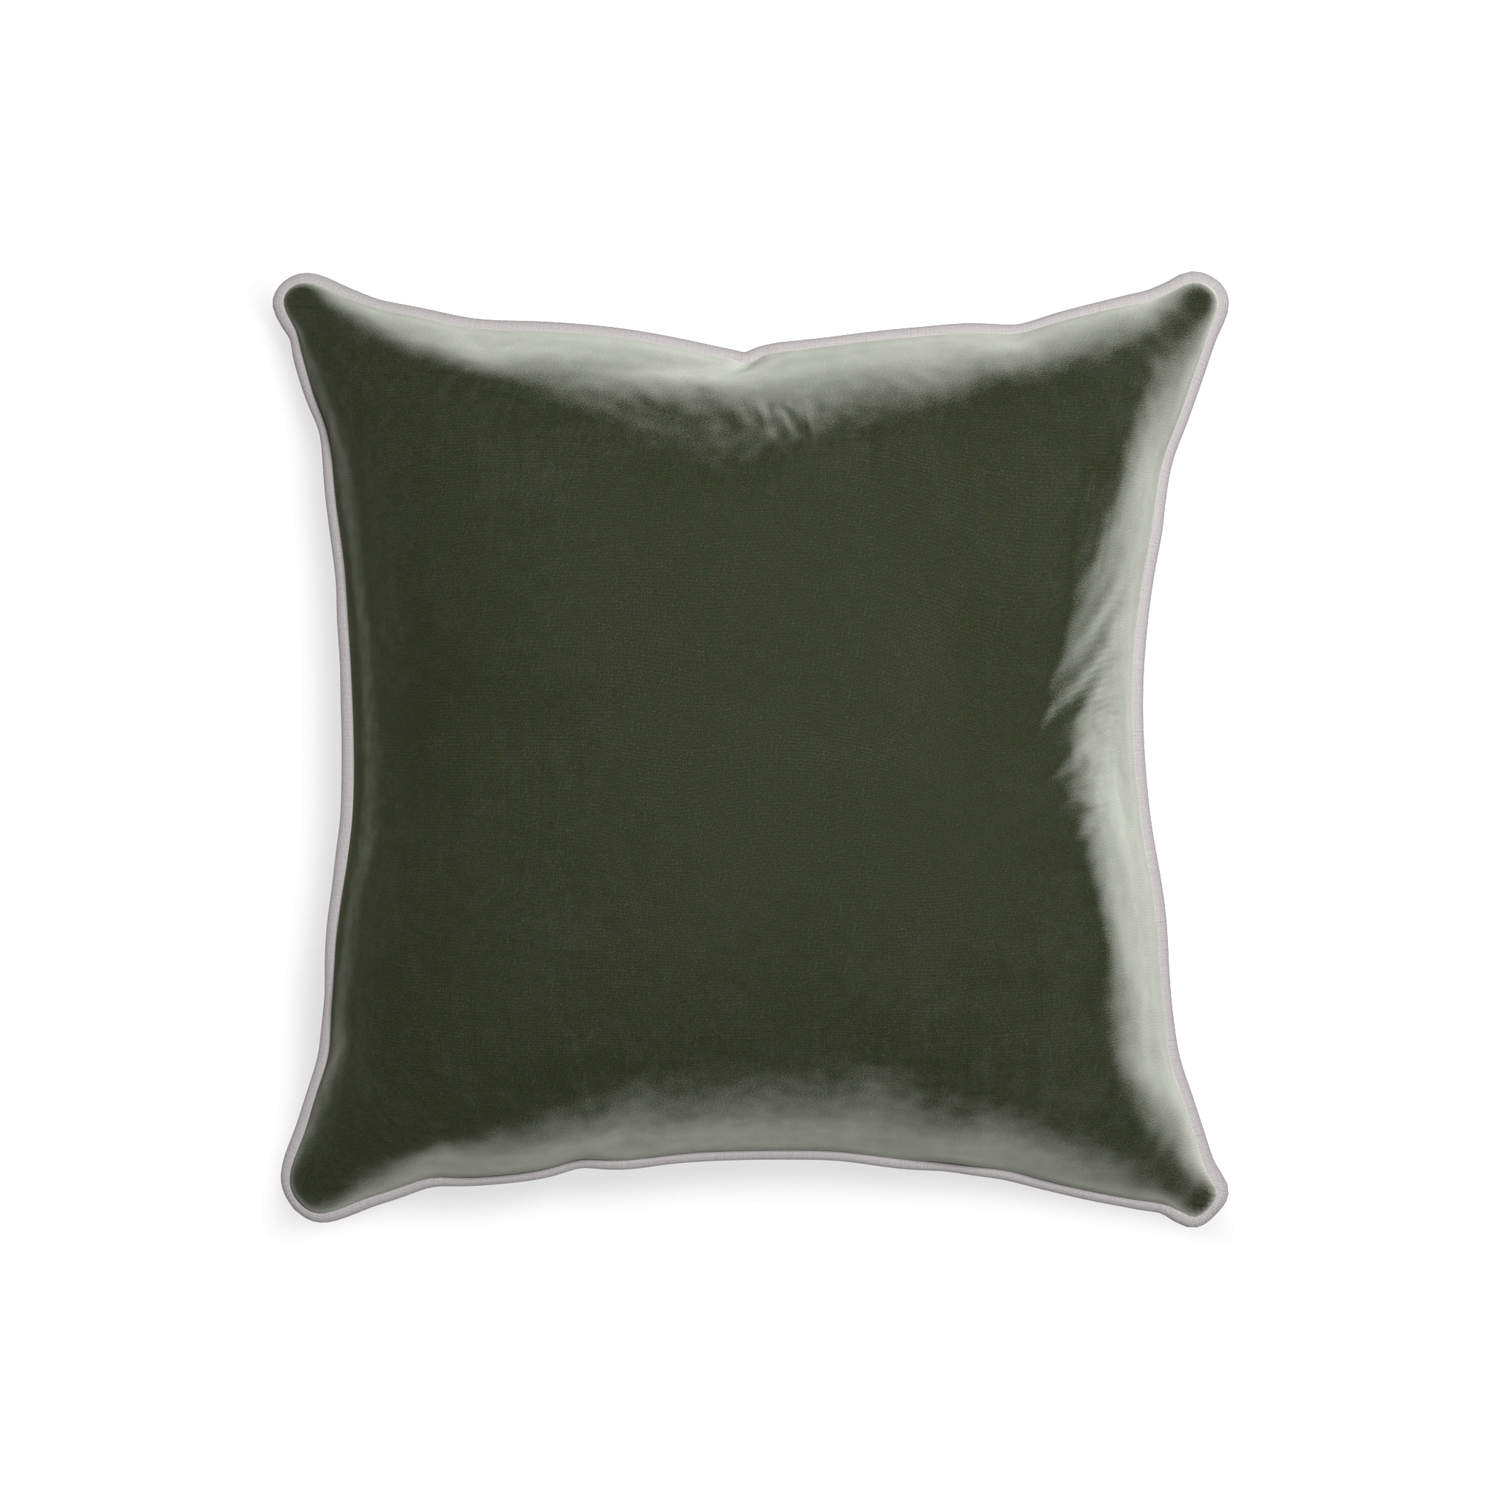 20-square fern velvet custom pillow with pebble piping on white background